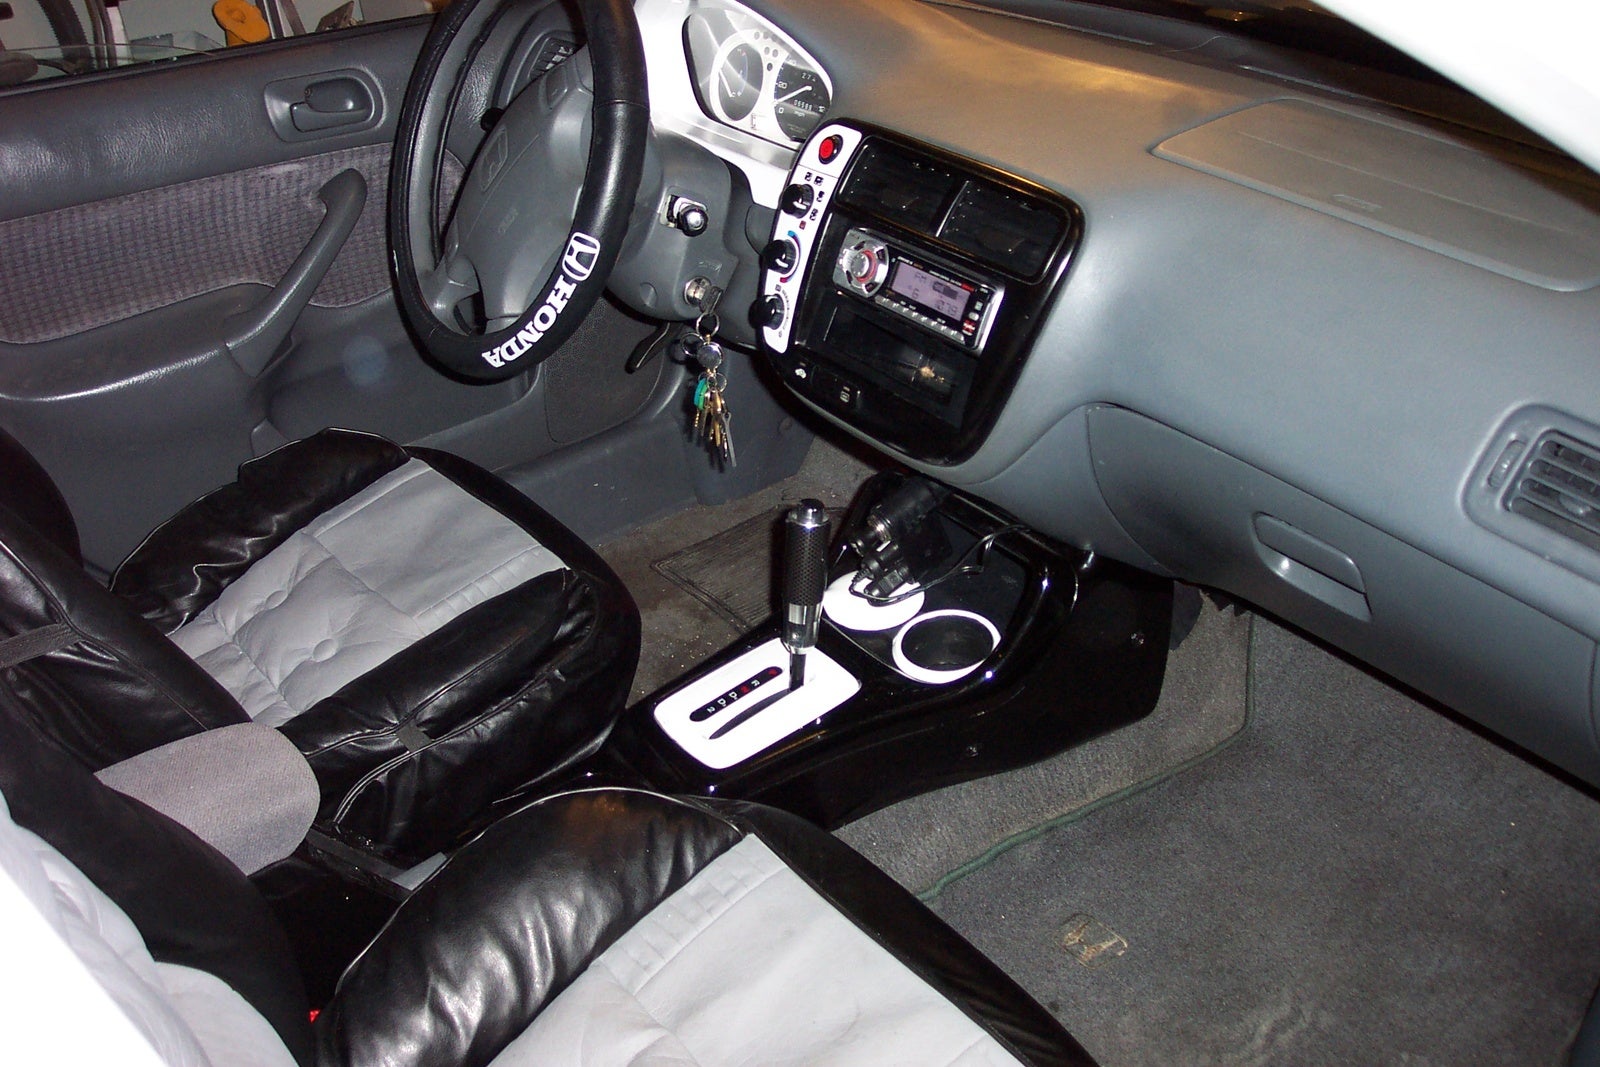 Honda Civic Hatchback 2000 Interior